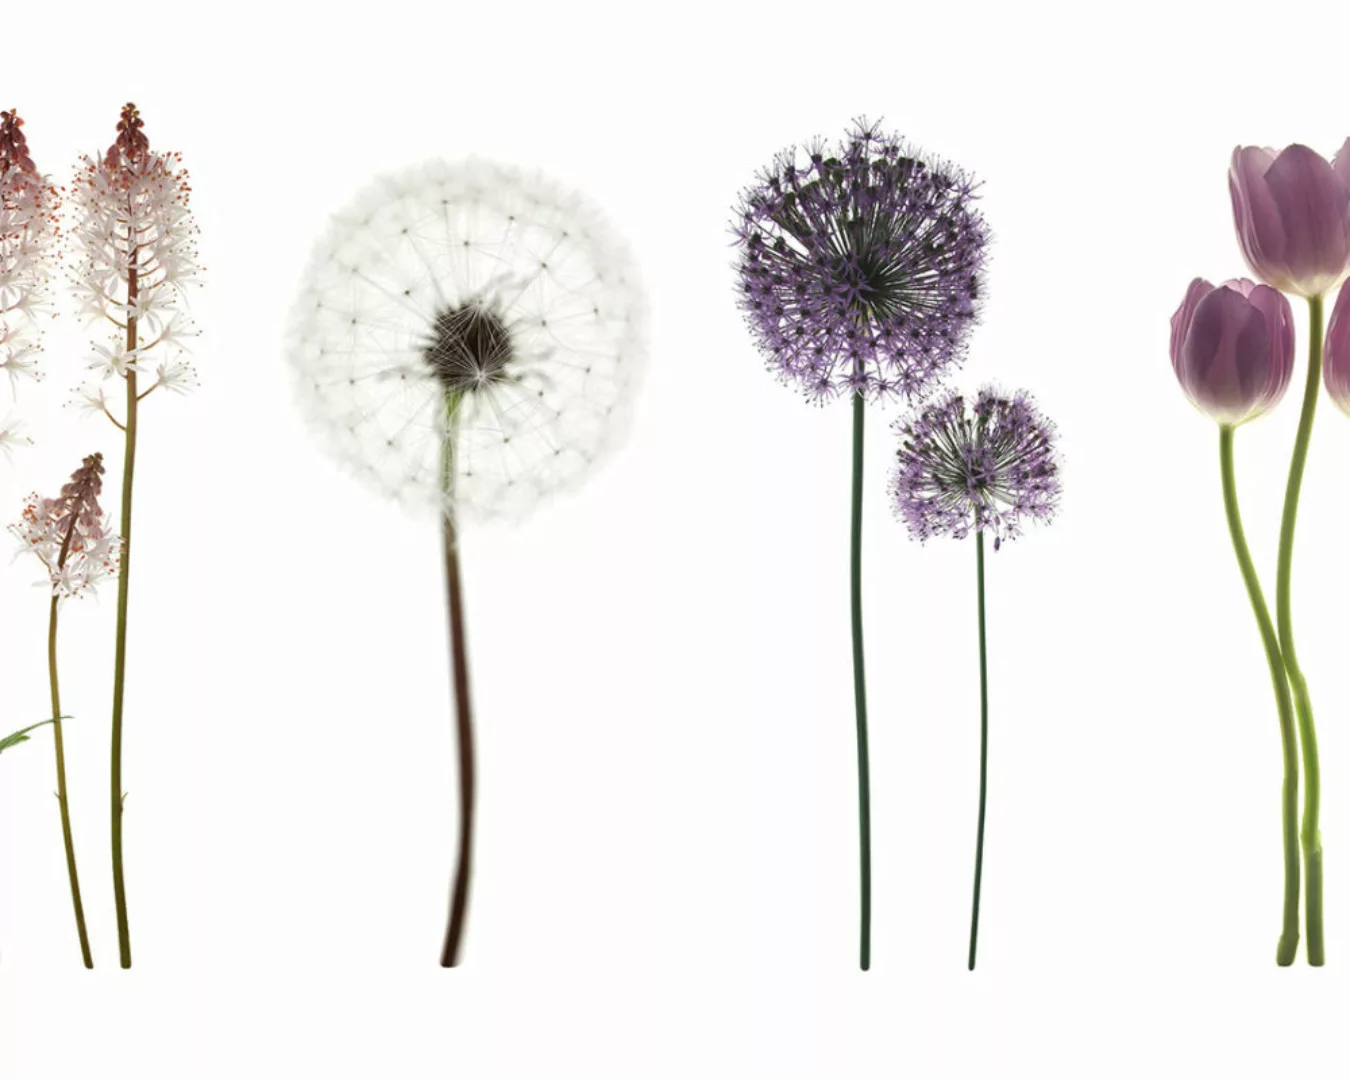 Fototapete "Lila Blumen" 4,00x2,50 m / Glattvlies Perlmutt günstig online kaufen